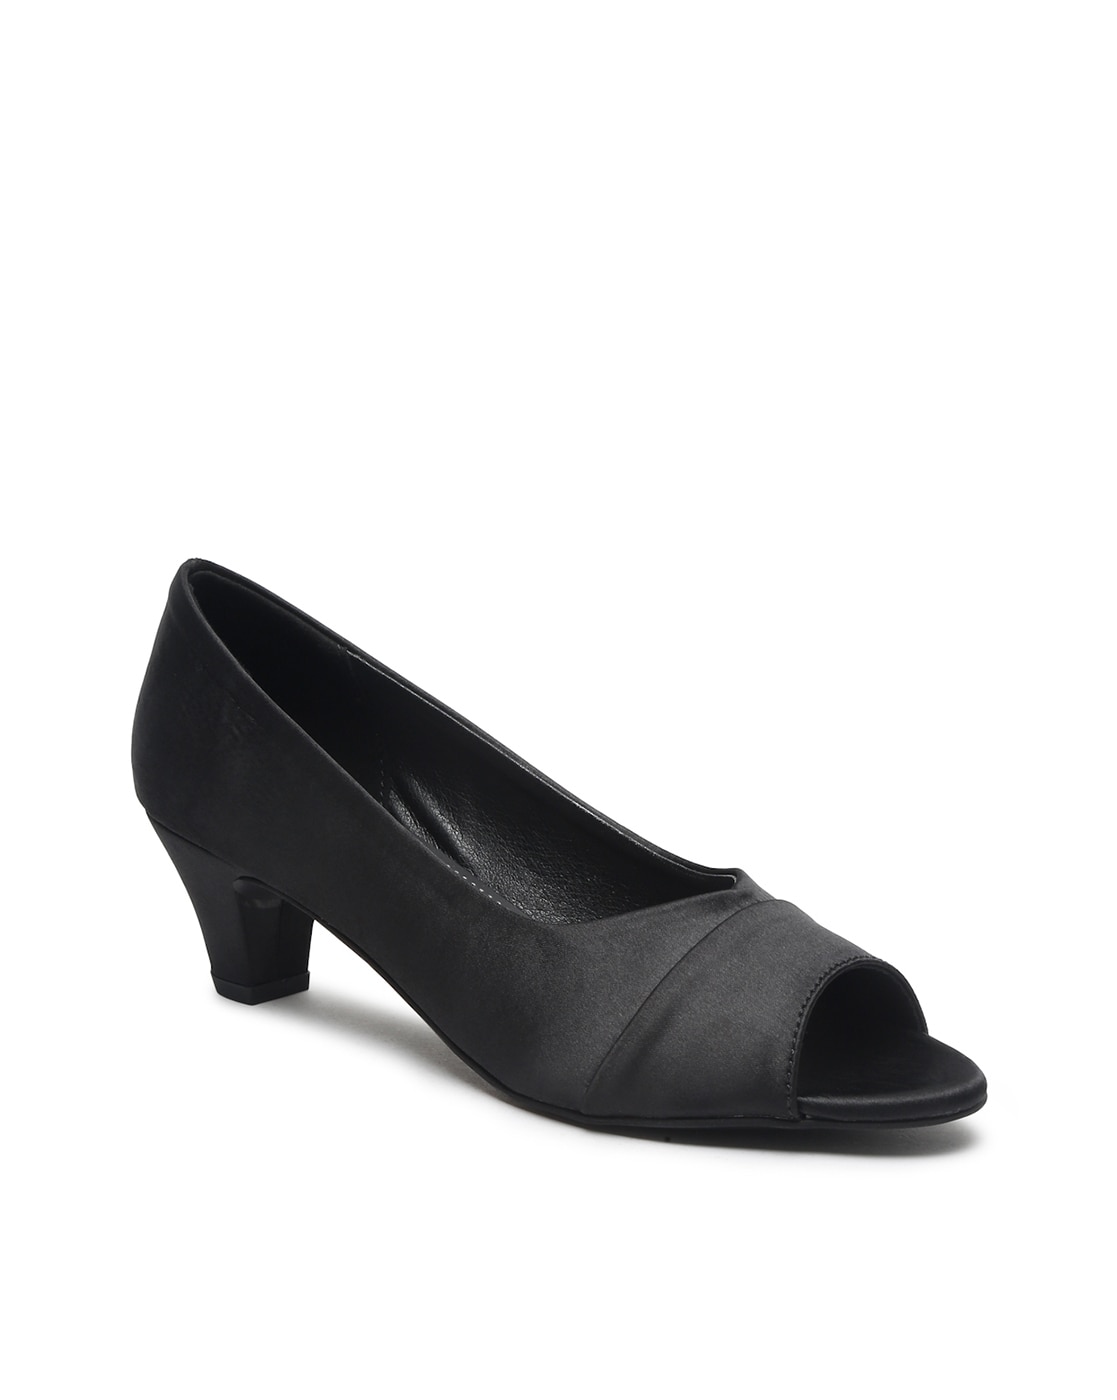 Stuart Weitzman Black Low Heel Dress Shoes Mesh Square Toe Womens 8.5 | eBay